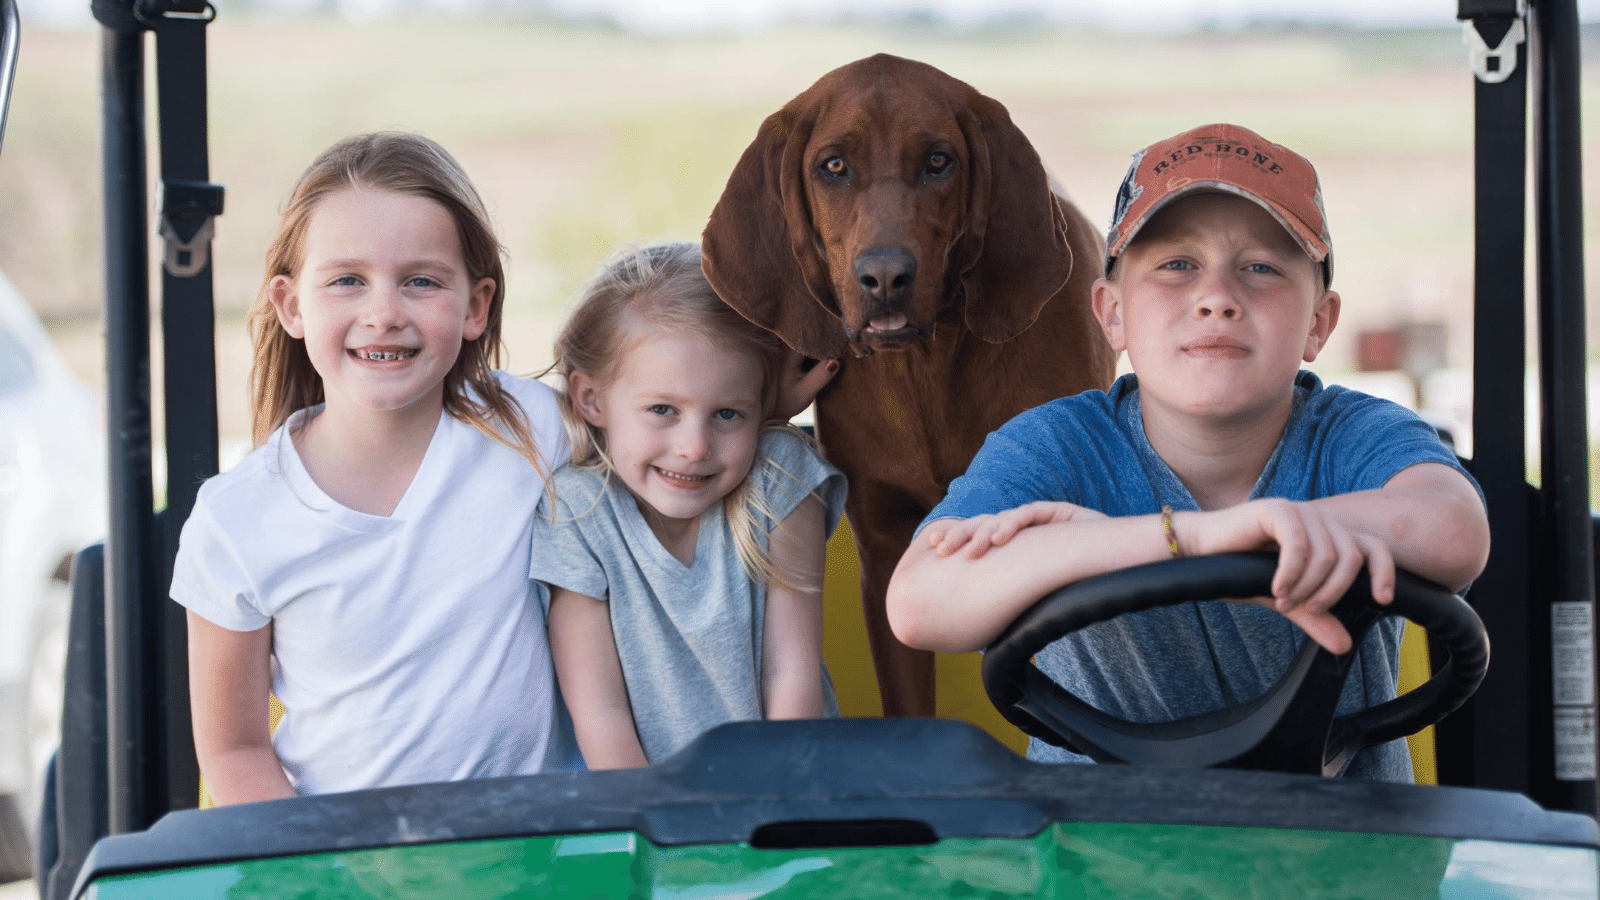 Farm kids and their dog take a ride on the farm utility